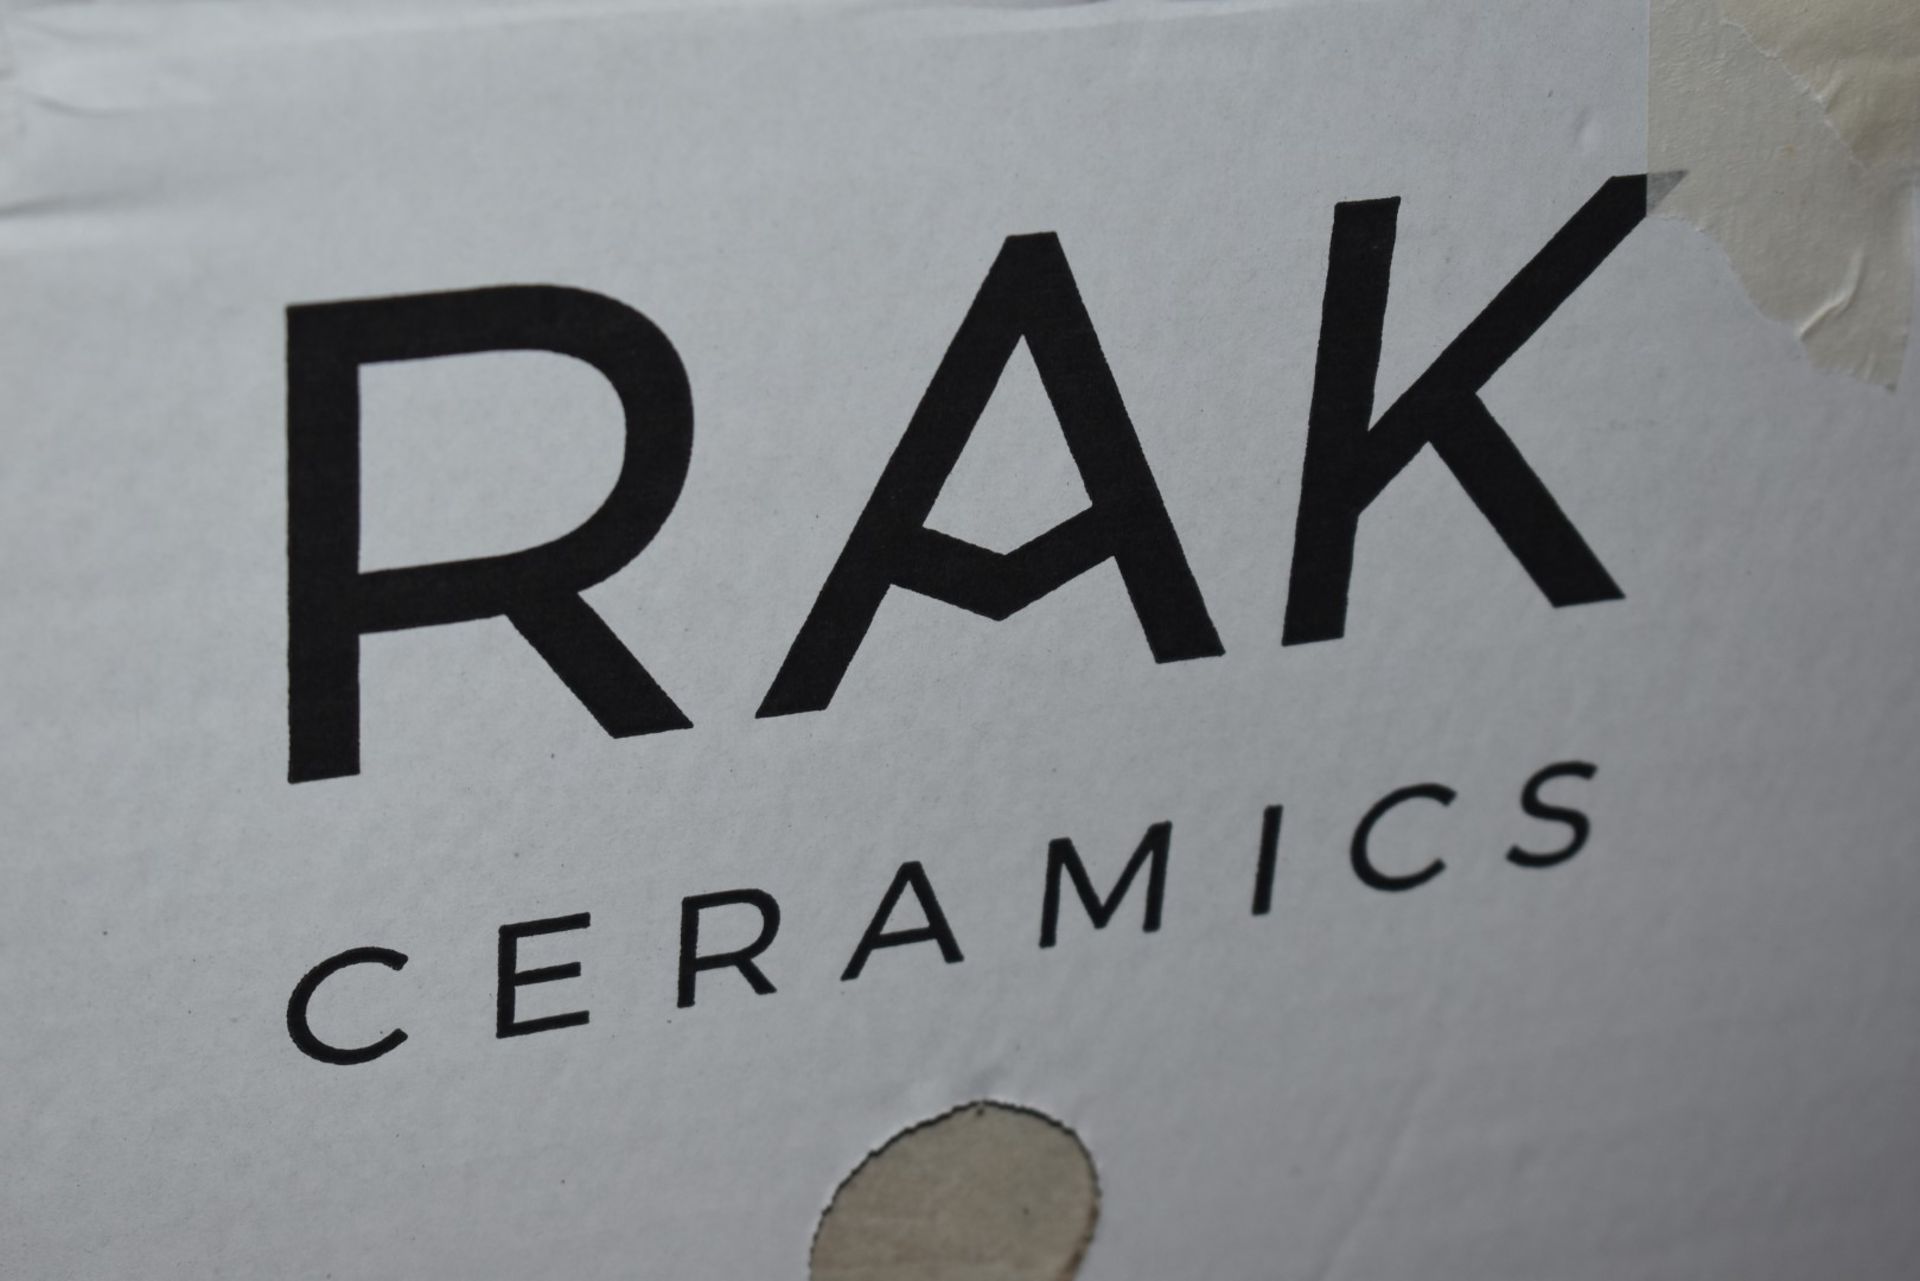 10 x Boxes of RAK Porcelain Floor or Wall Tiles - Capital Wood in Natural Oak - 29.5 x 120 cm - Image 3 of 3